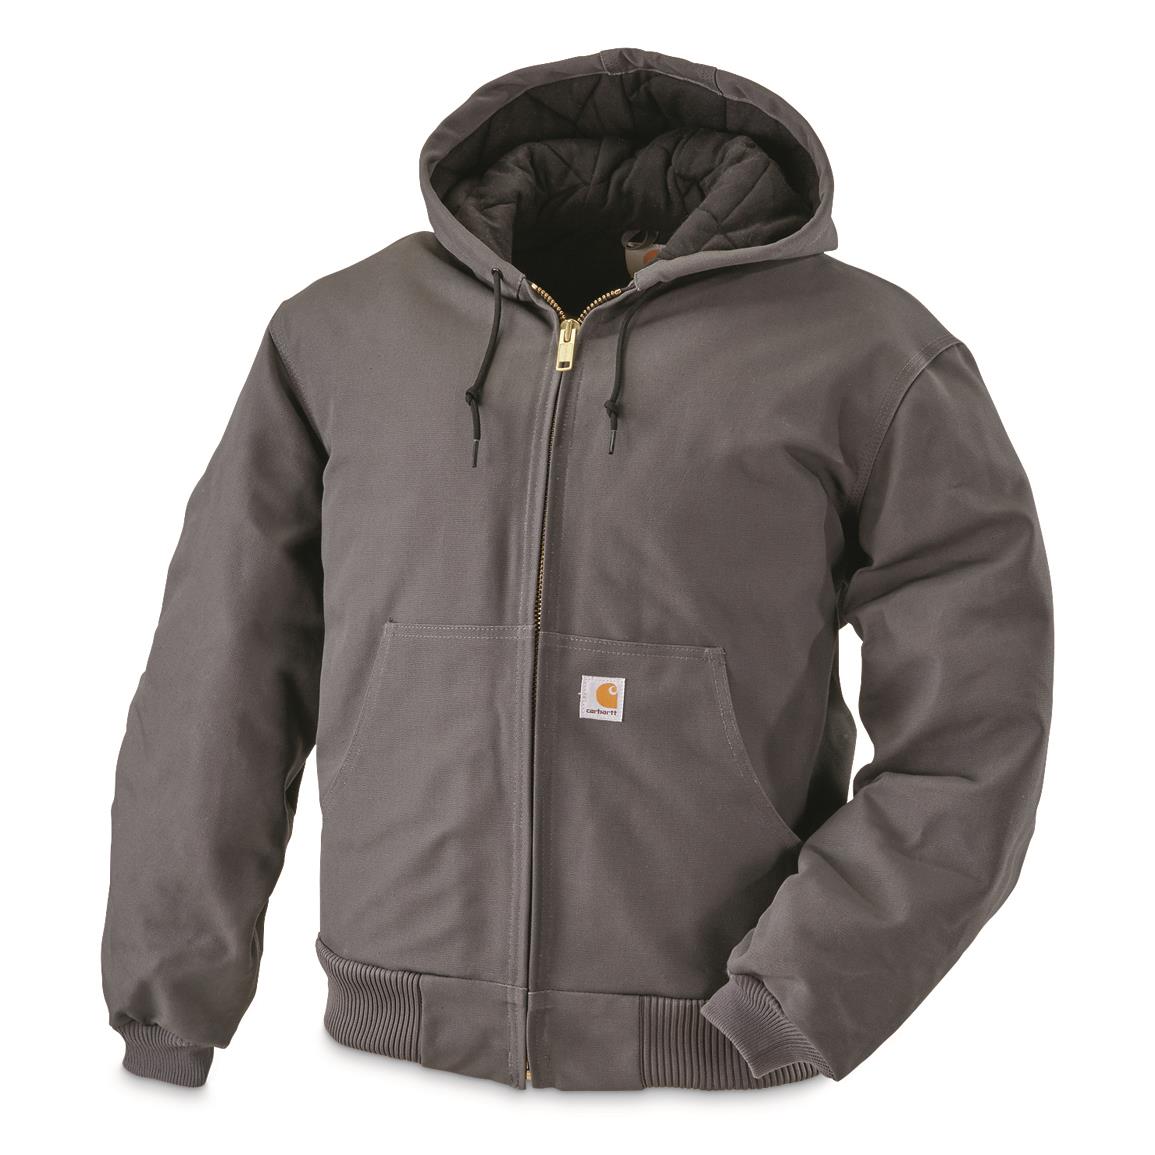 Grundens Men's Charter Waterproof Jacket, GORE-TEX - 725581, Jackets, Coats  & Rain Gear at Sportsman's Guide